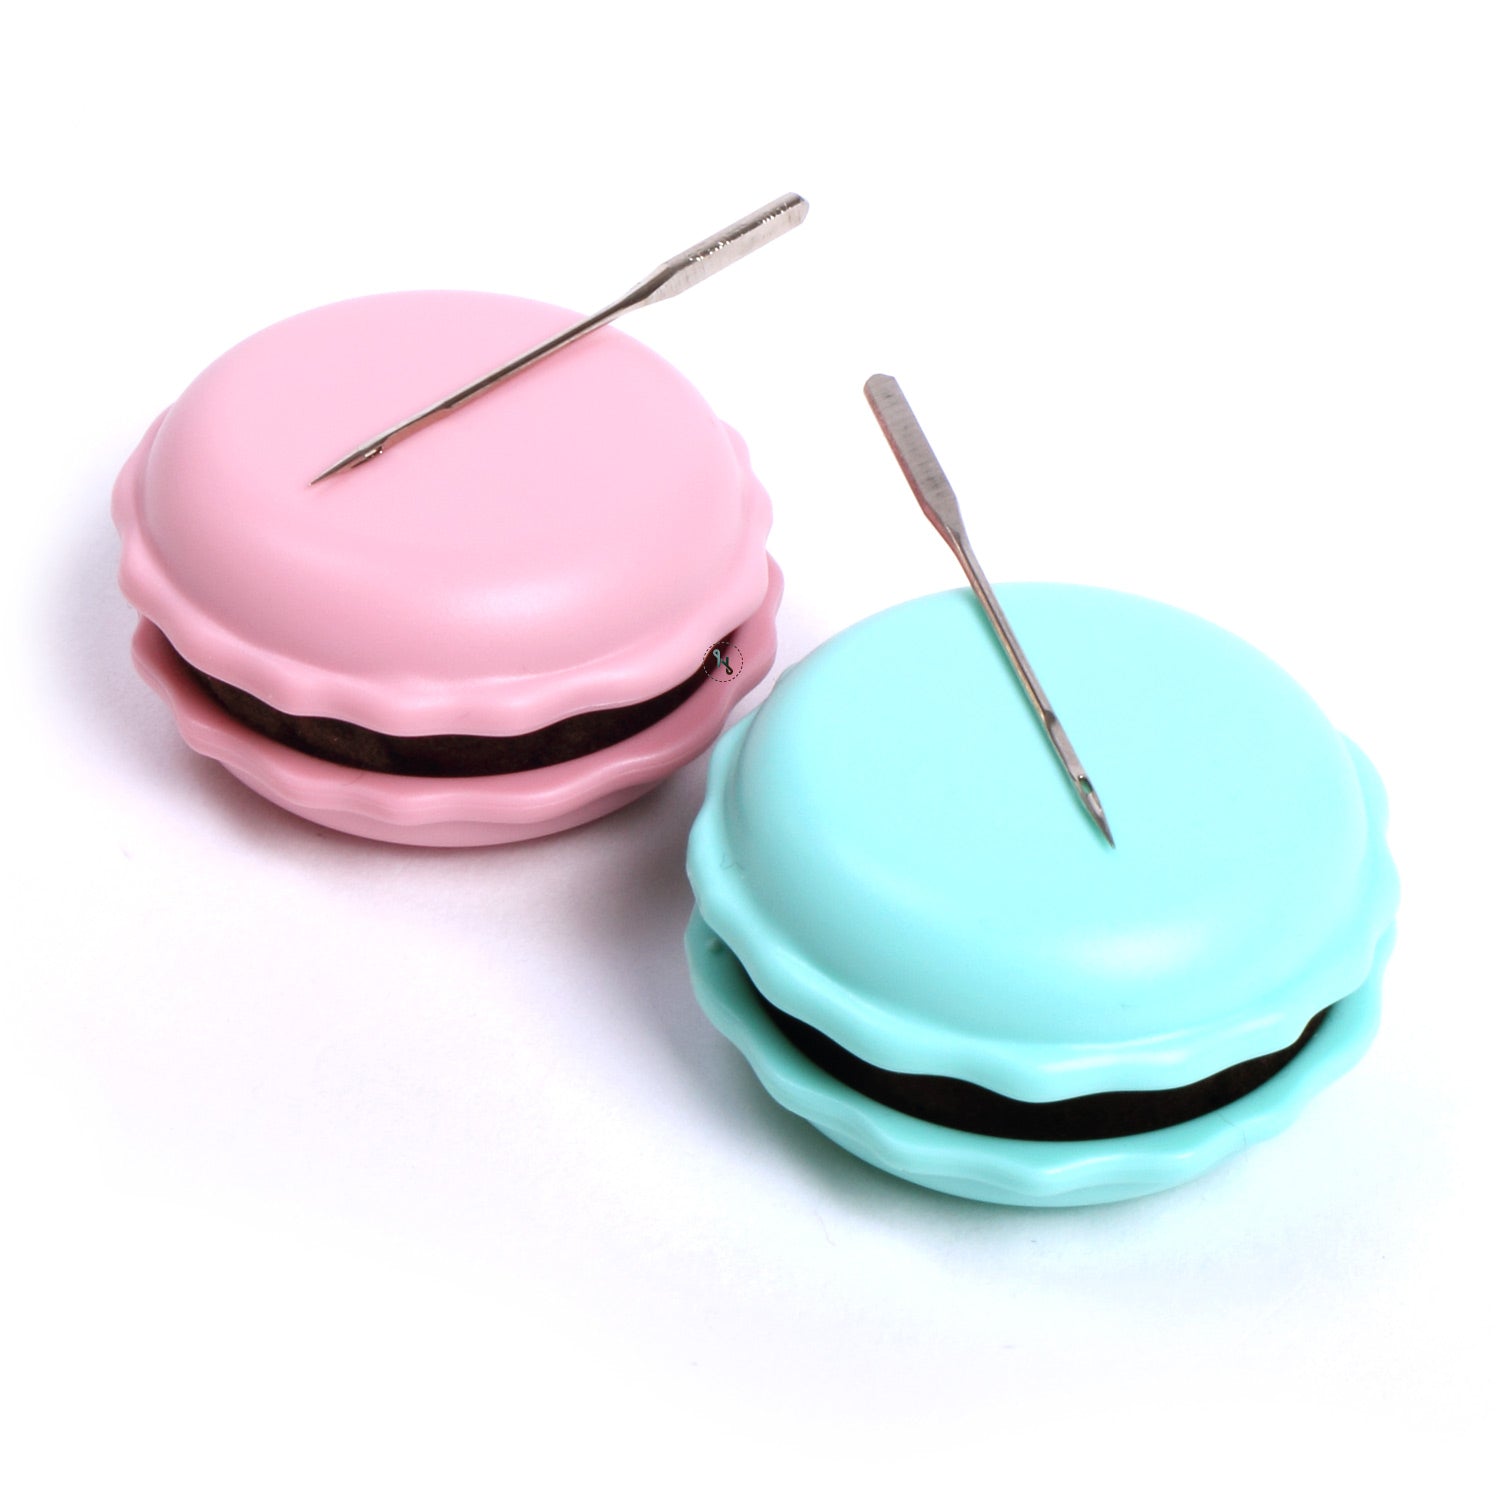 clover macaron needle sharpener – Needles & Wool